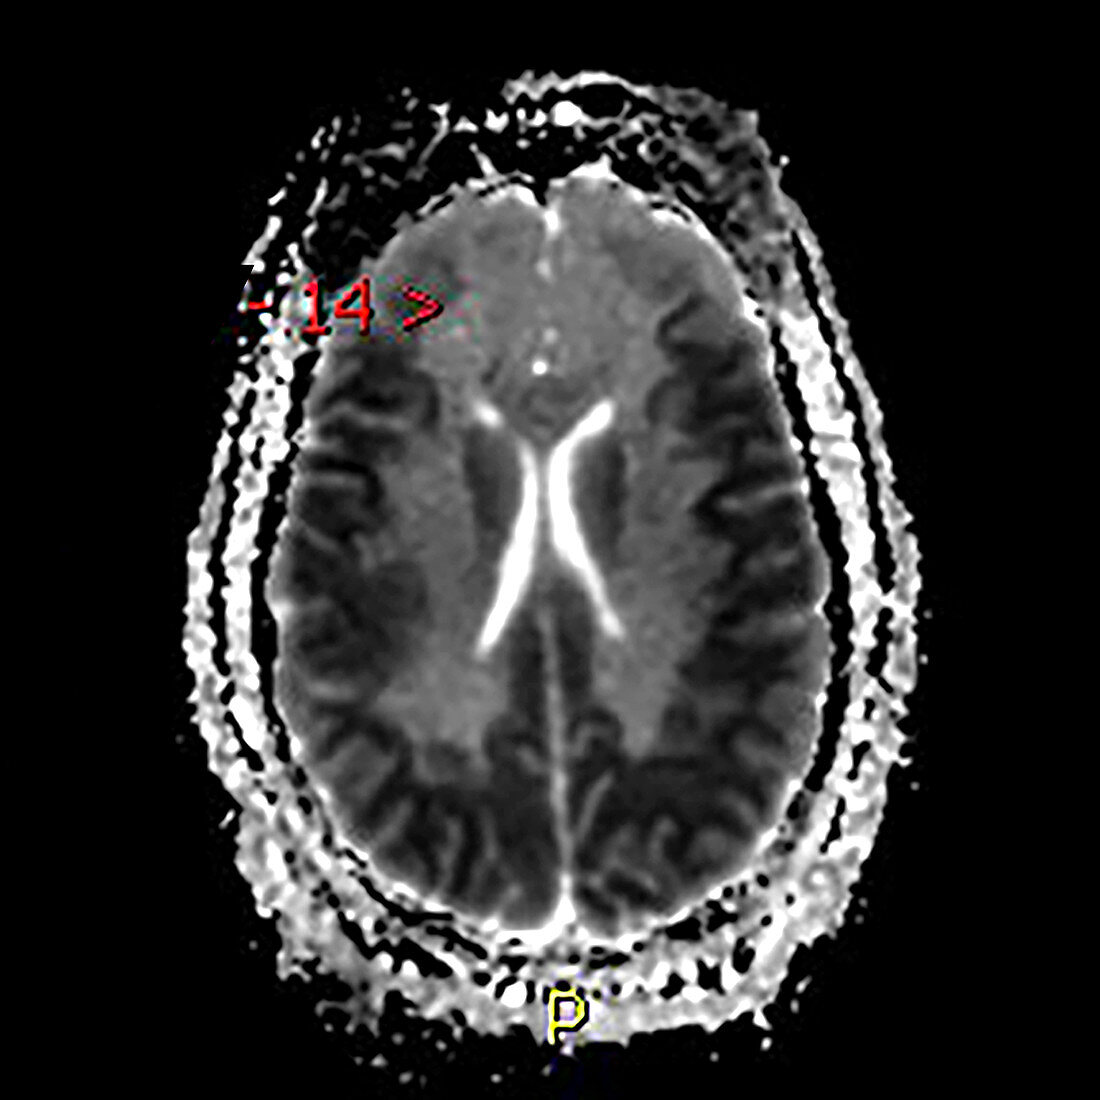 Diffuse Anoxic Injury after Cardiac Arrest, MRI